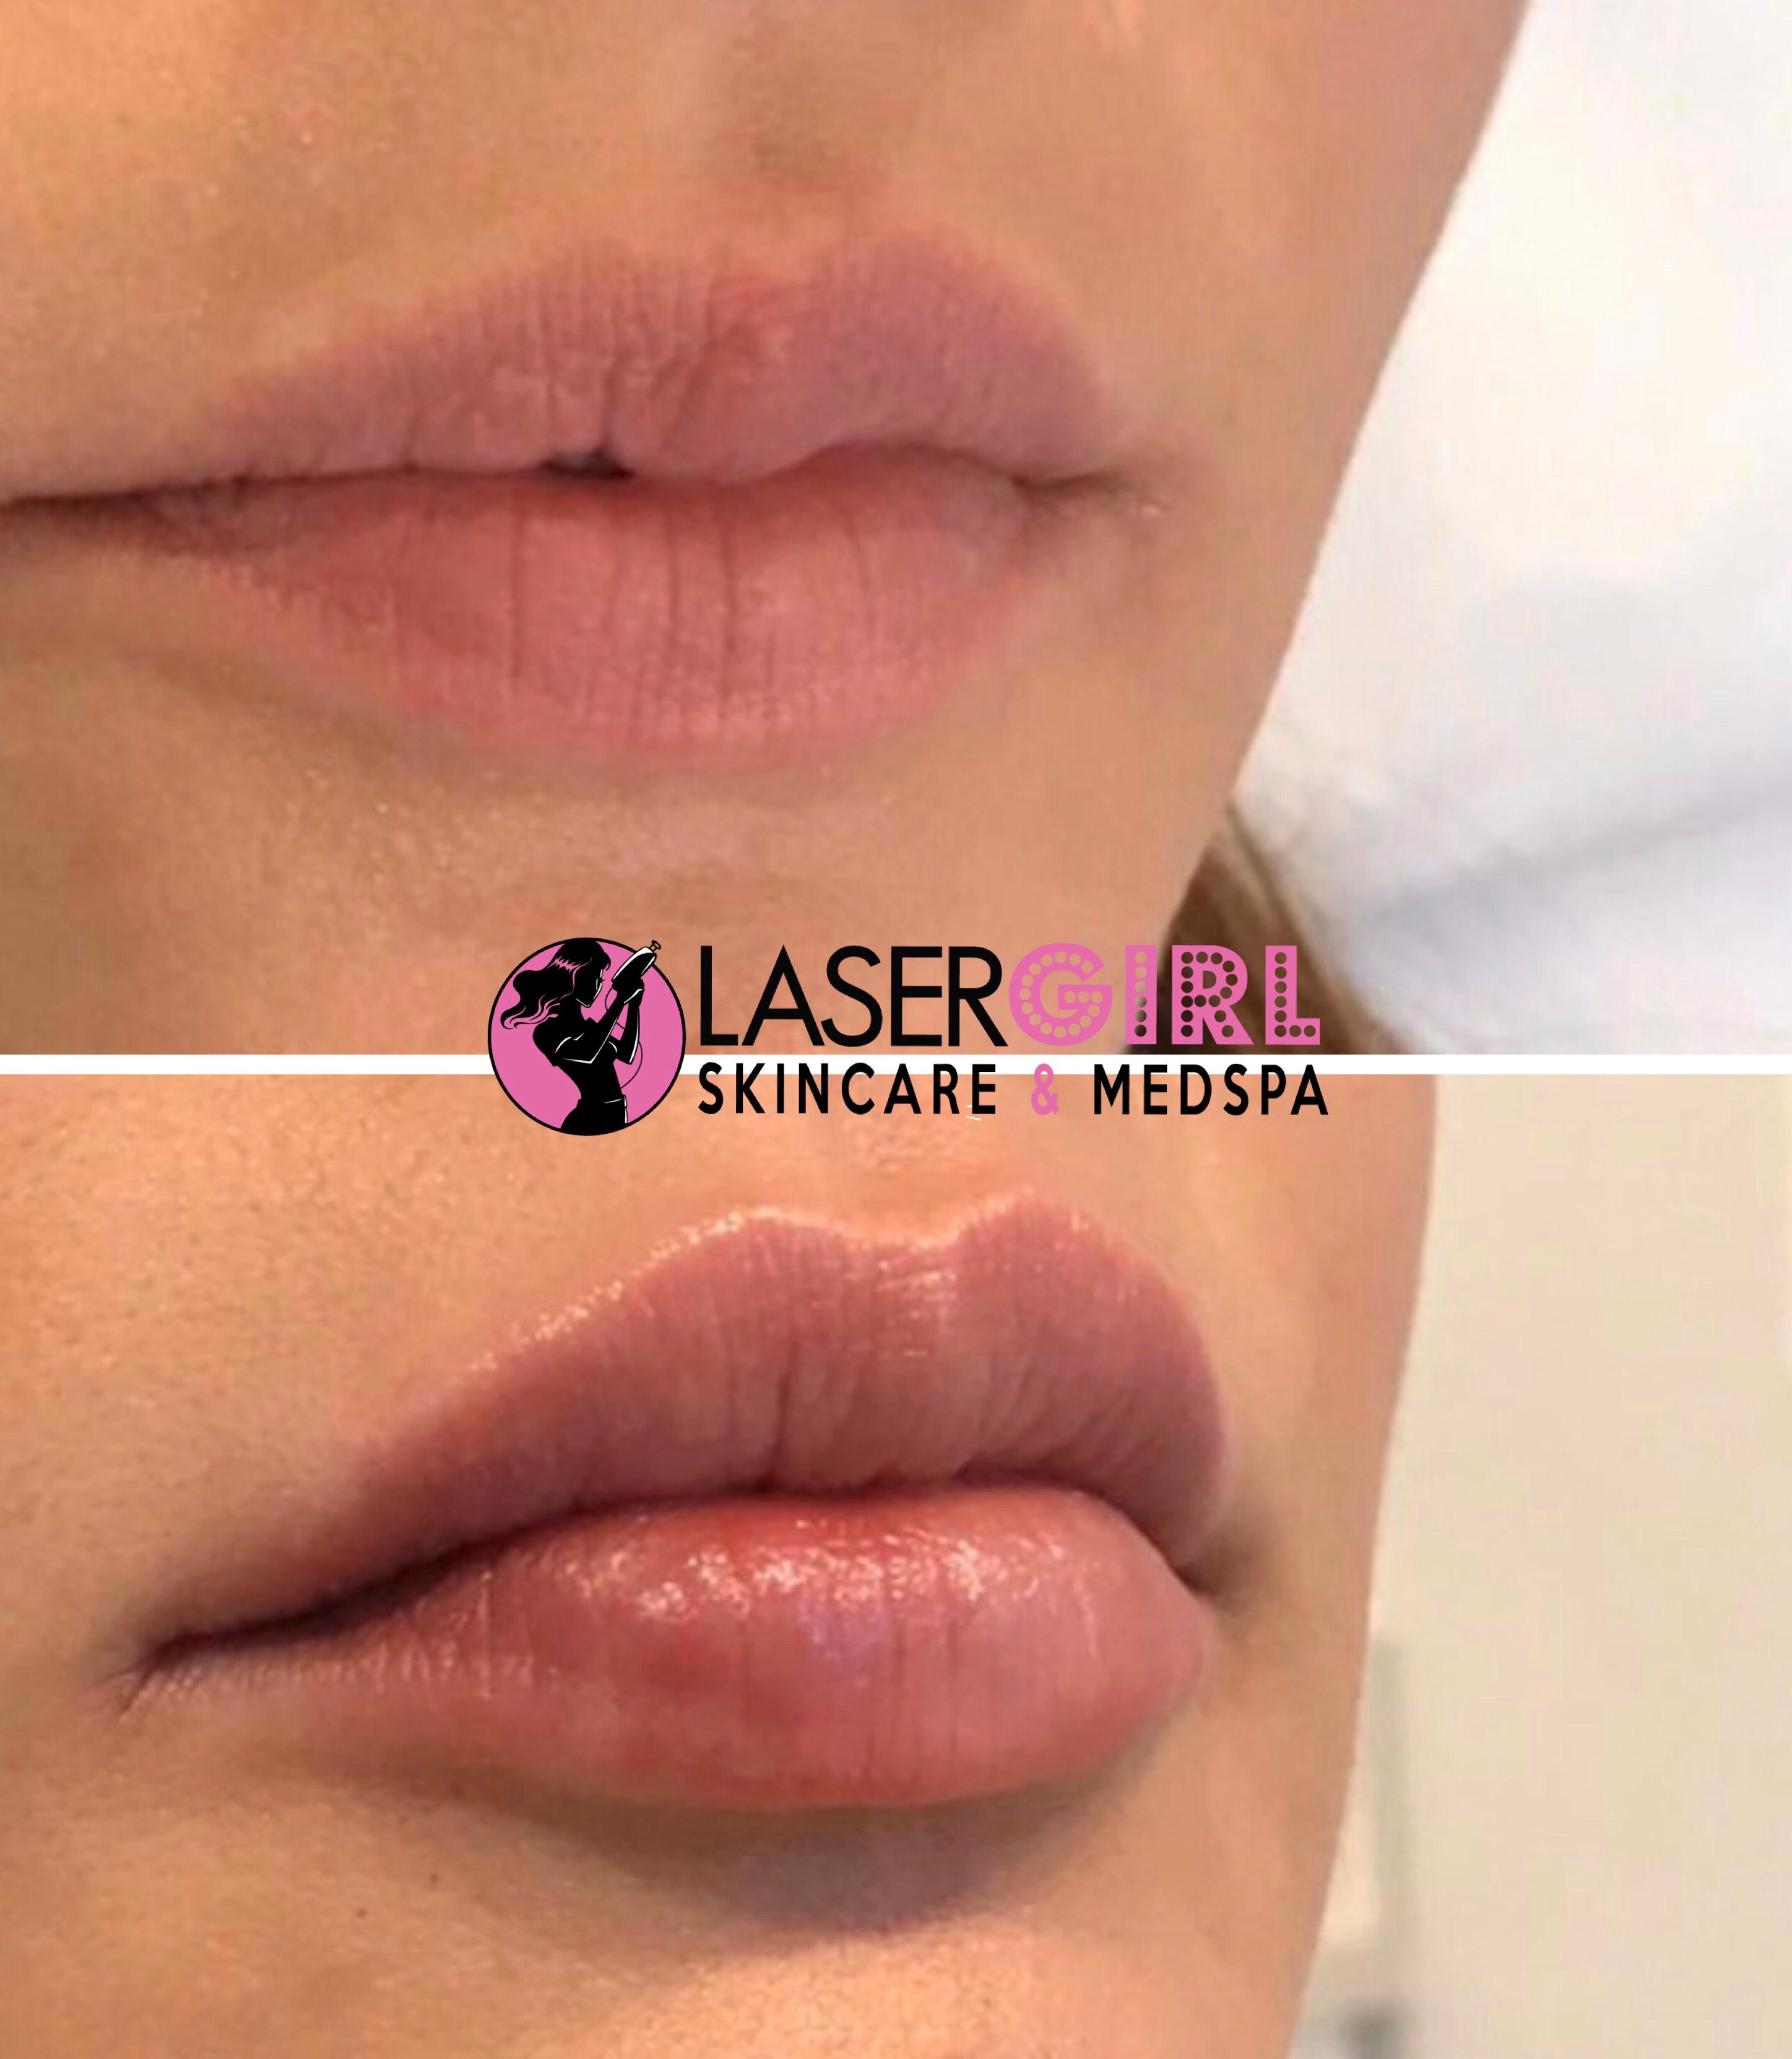 Laser Girl SkinCare & Med Spa Photo